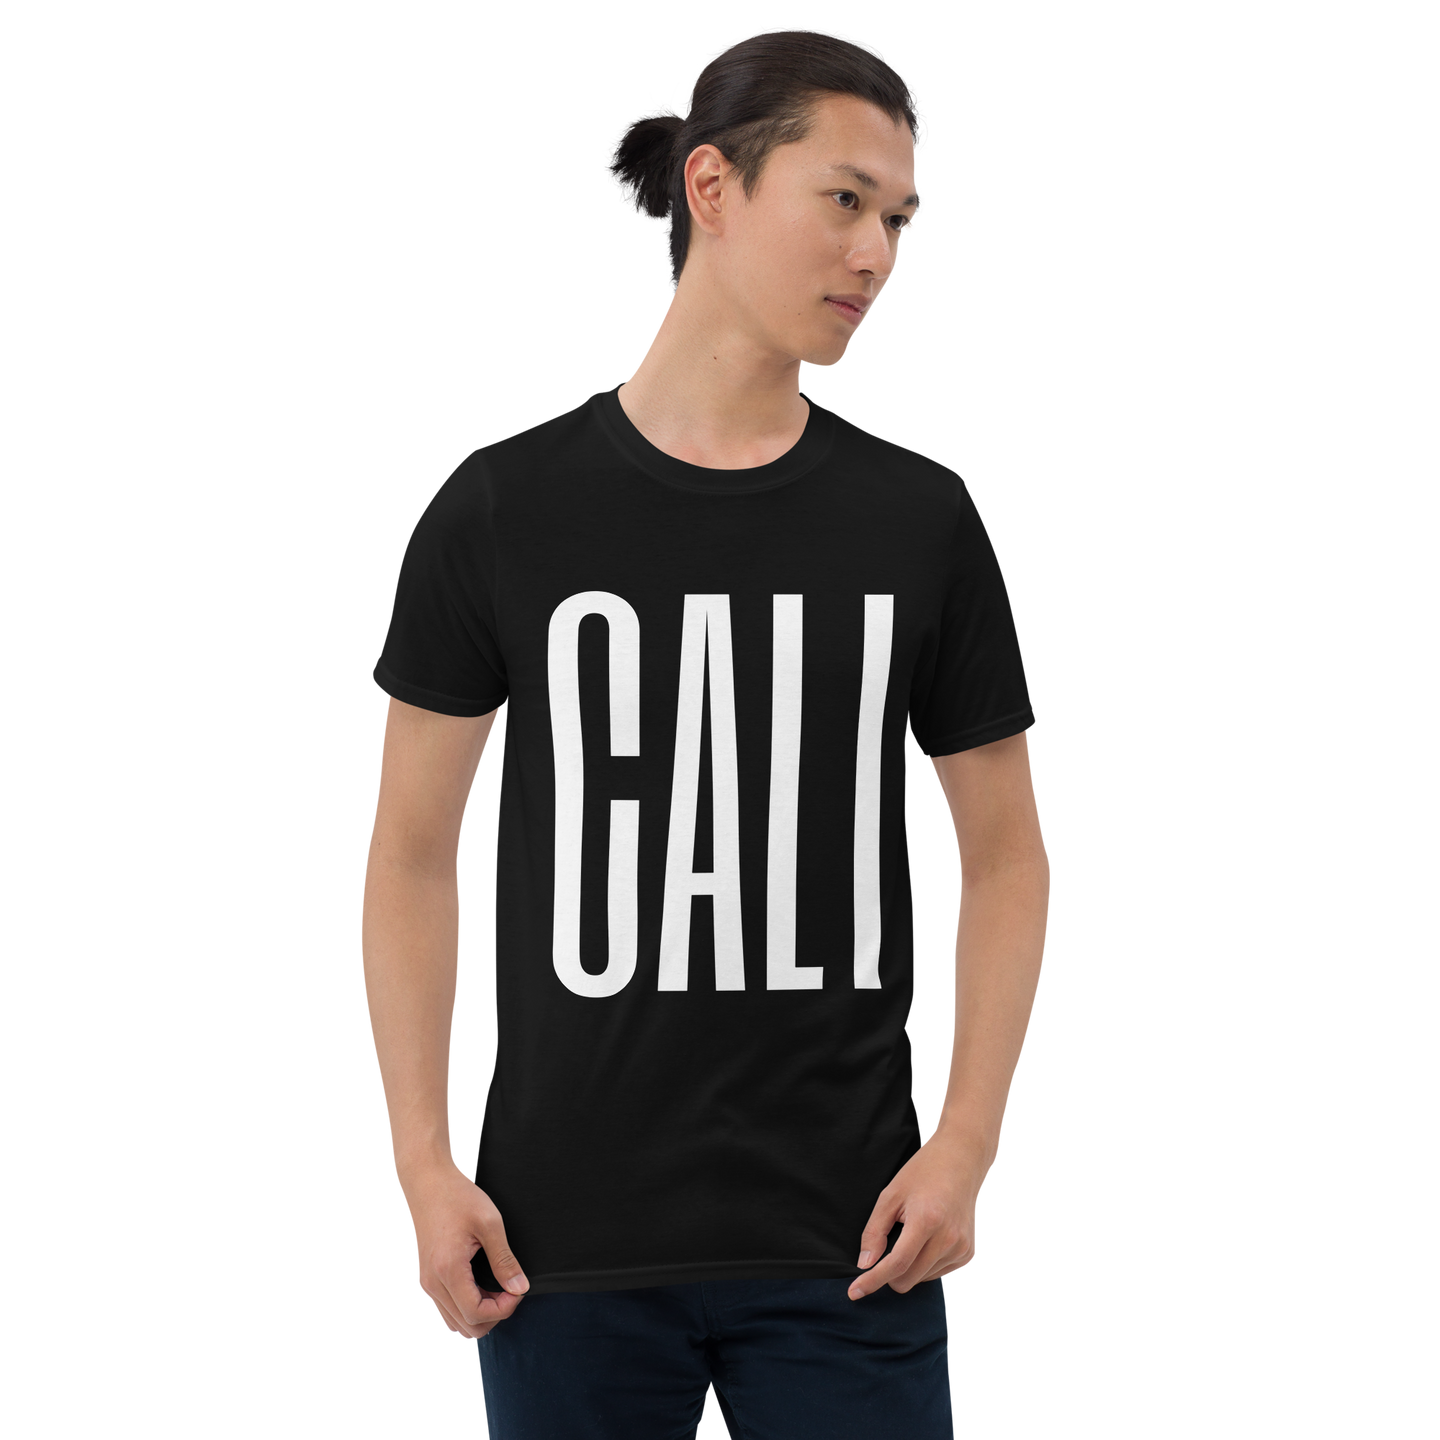 Unisex Short-Sleeve T-Shirt with CALI Design.